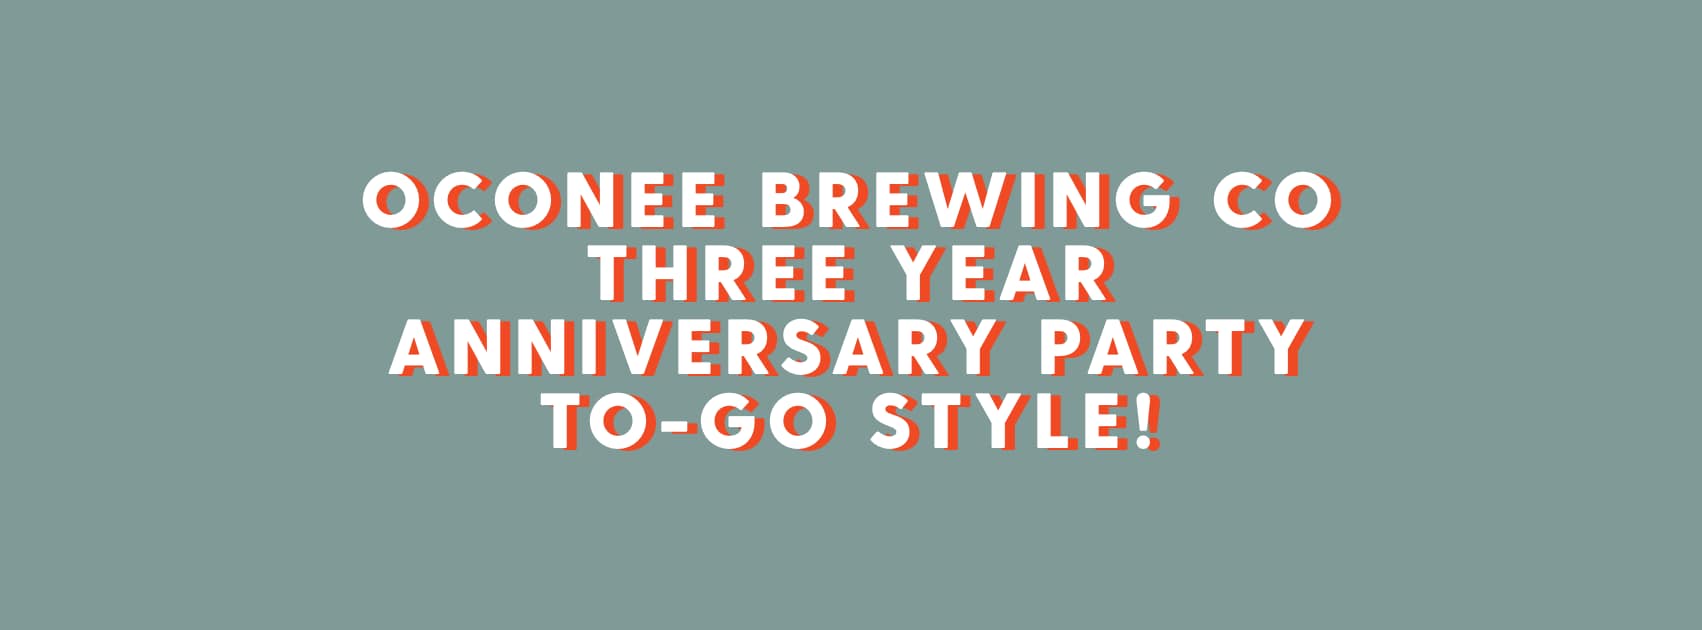 Oconee Brewing Company Third Anniversary